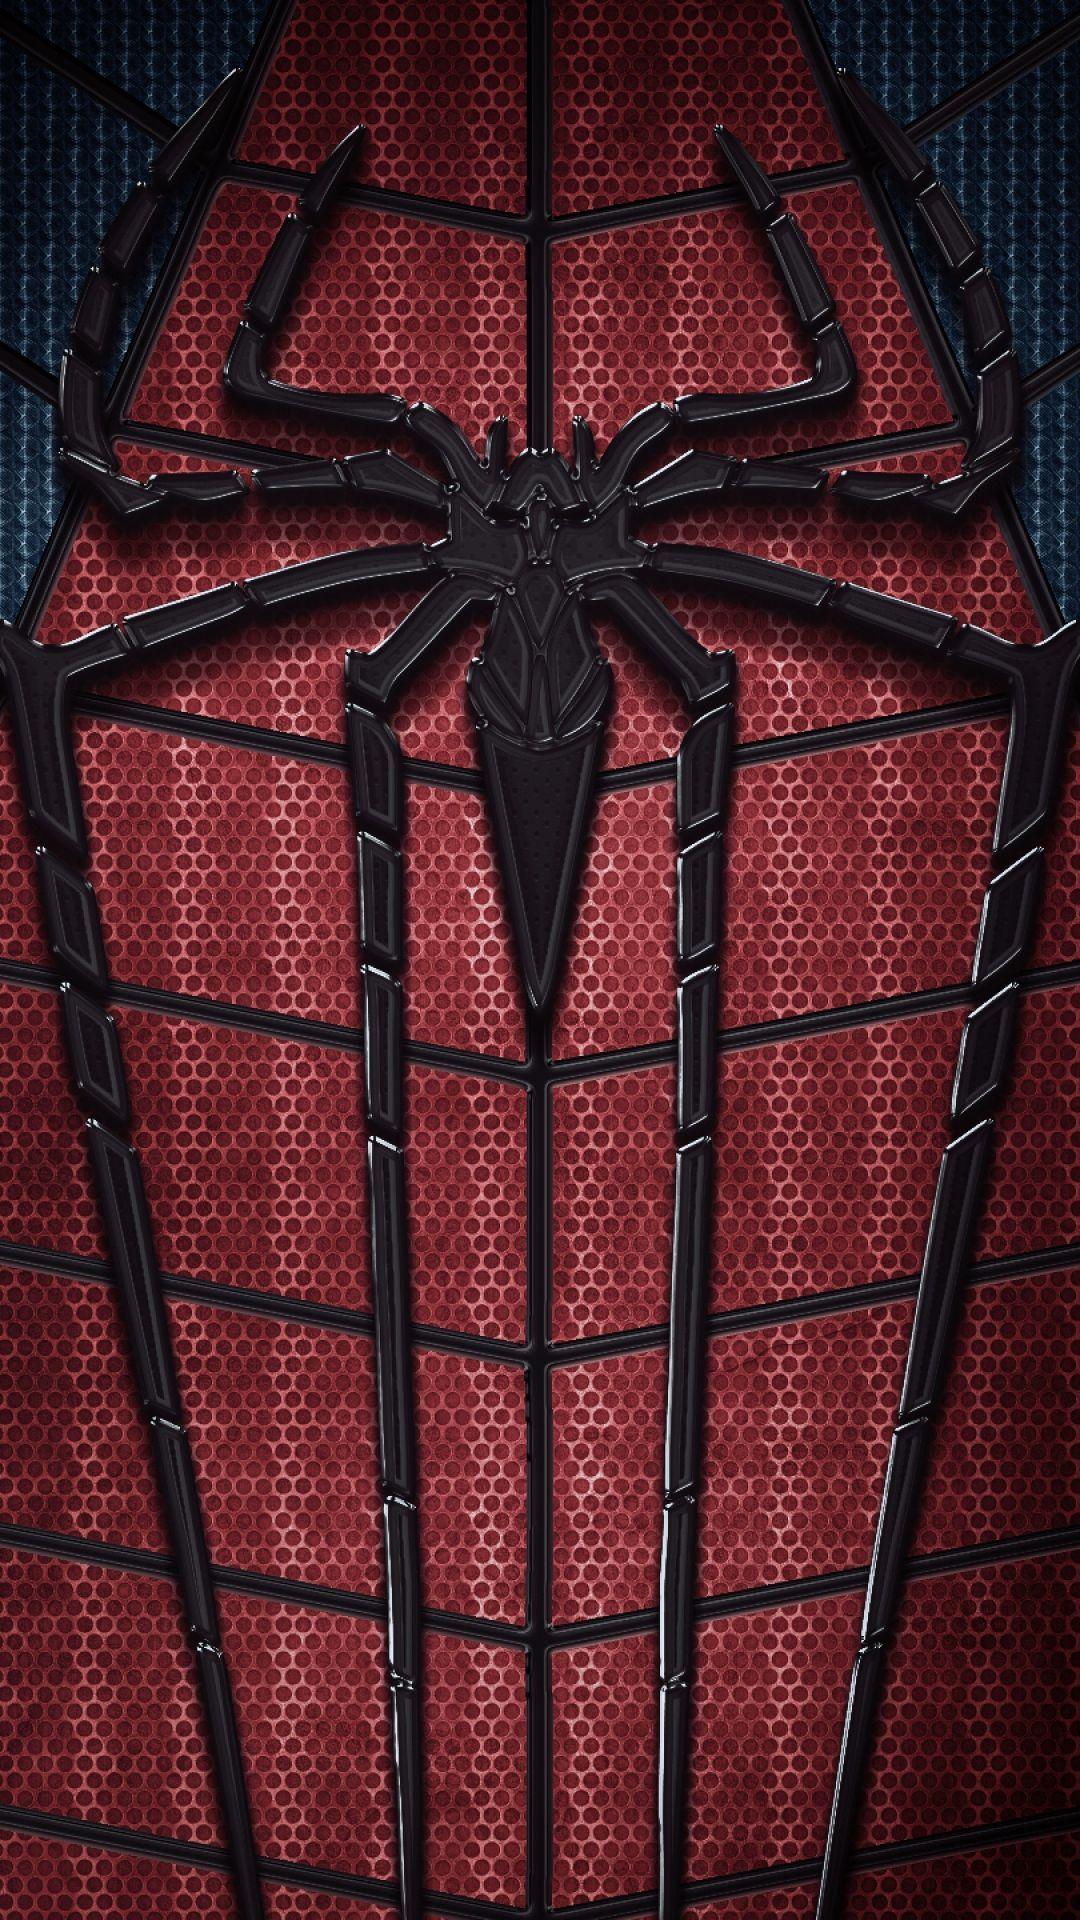 Amazing Spider Man IPhone Wallpaper Free Amazing